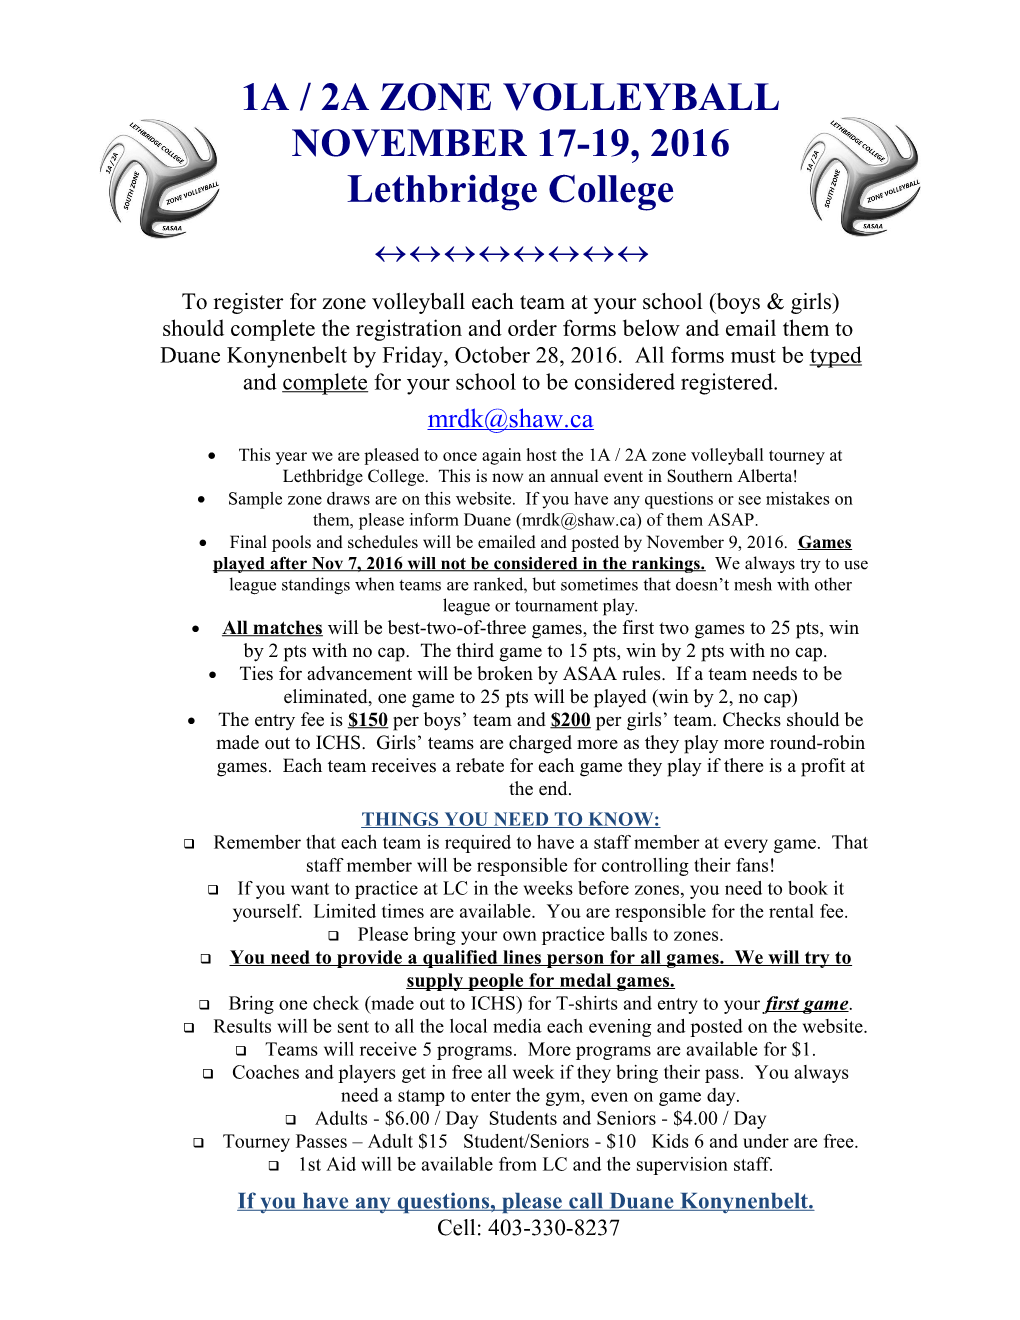 Lethbridge College s1